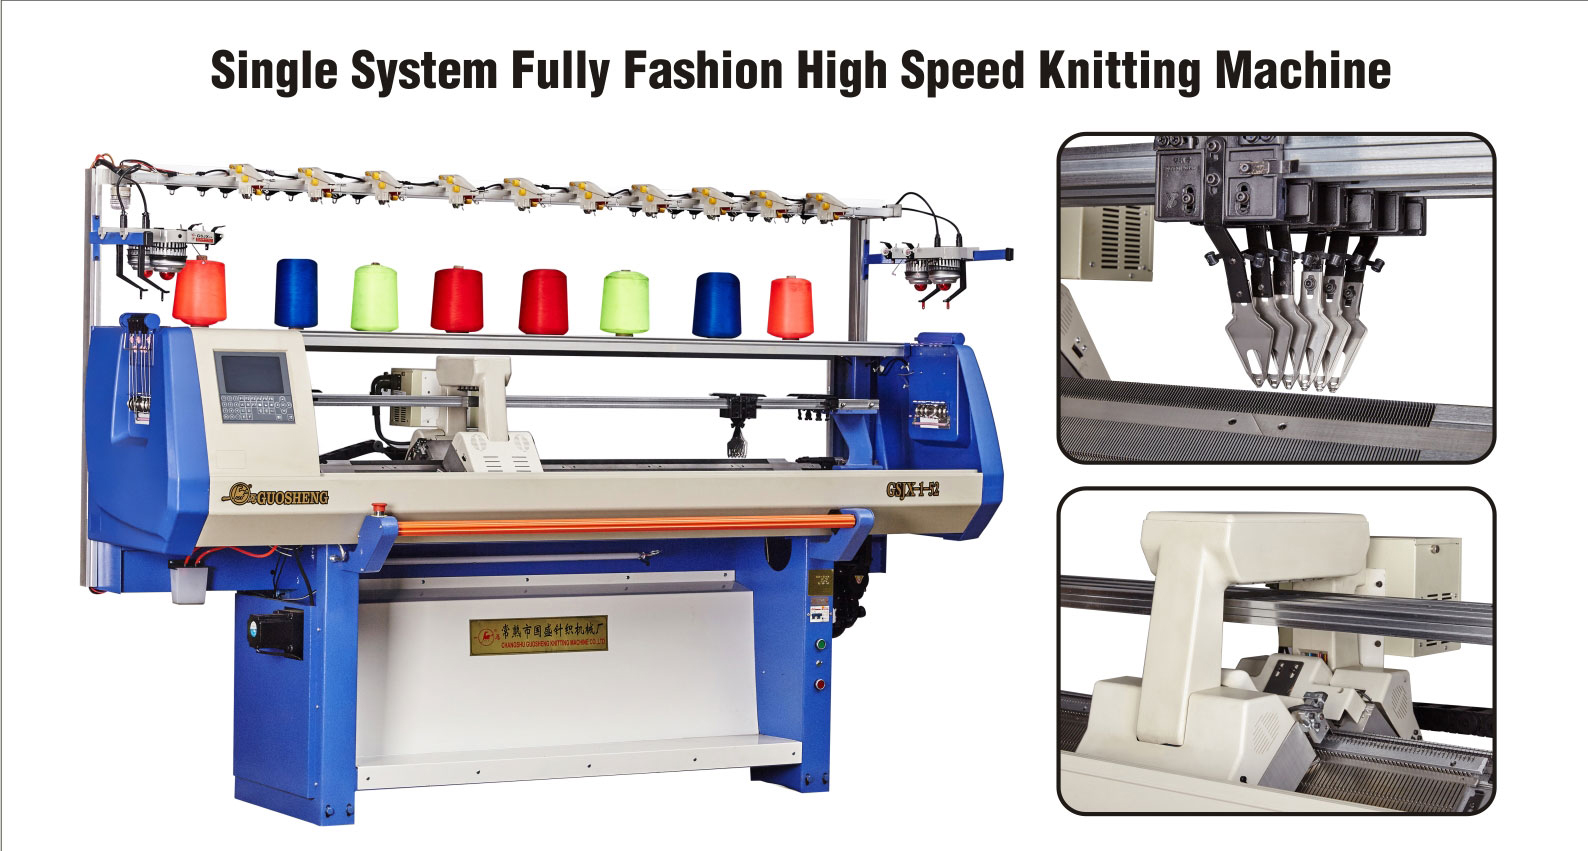 Single System Fully Fashion High Speed Knitting Machine